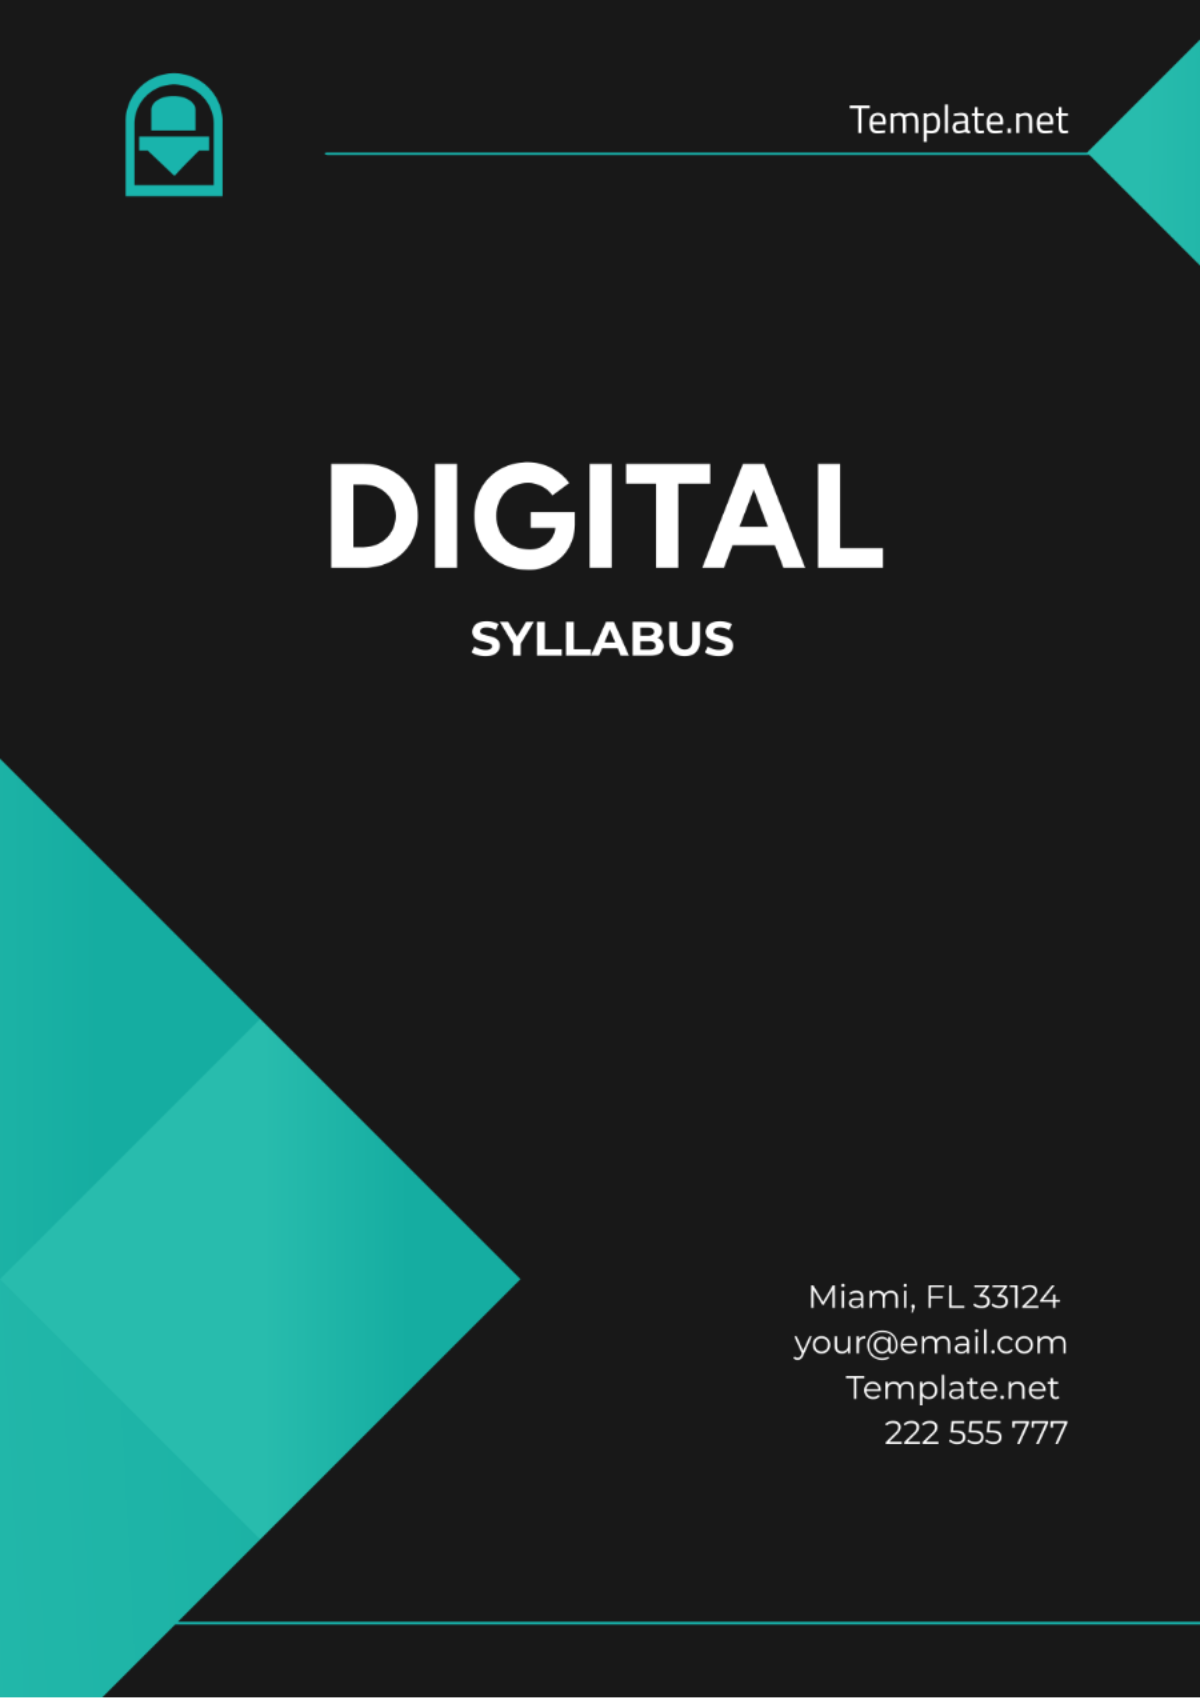 Digital Syllabus Template